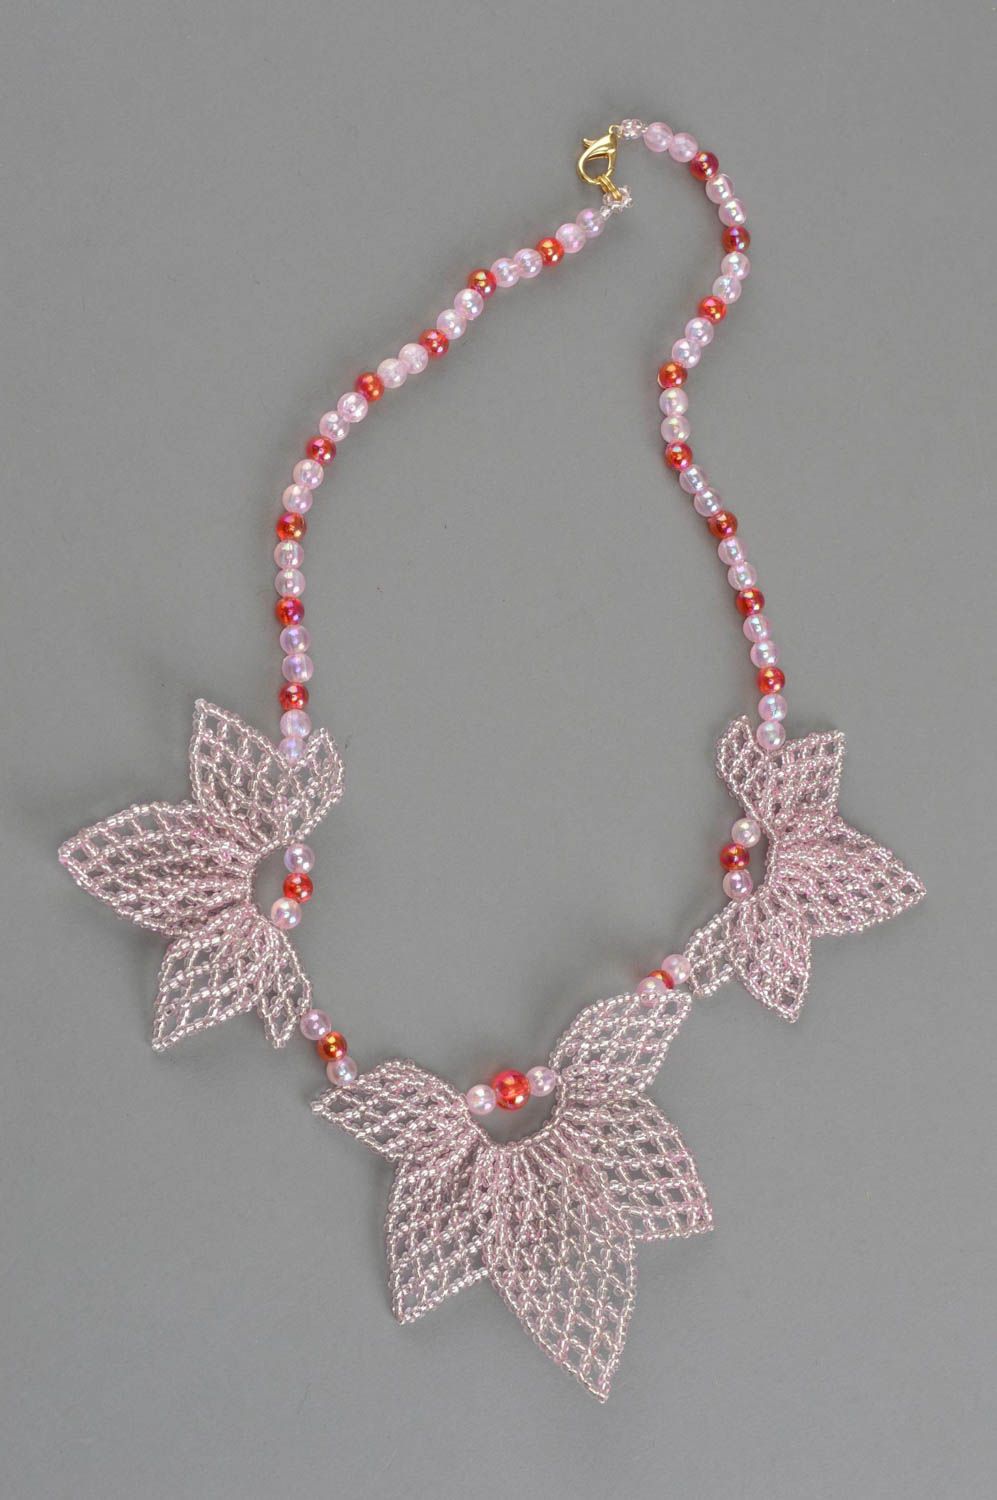 Beaded handmade necklace handmade accessory for girls evening jewelry photo 2